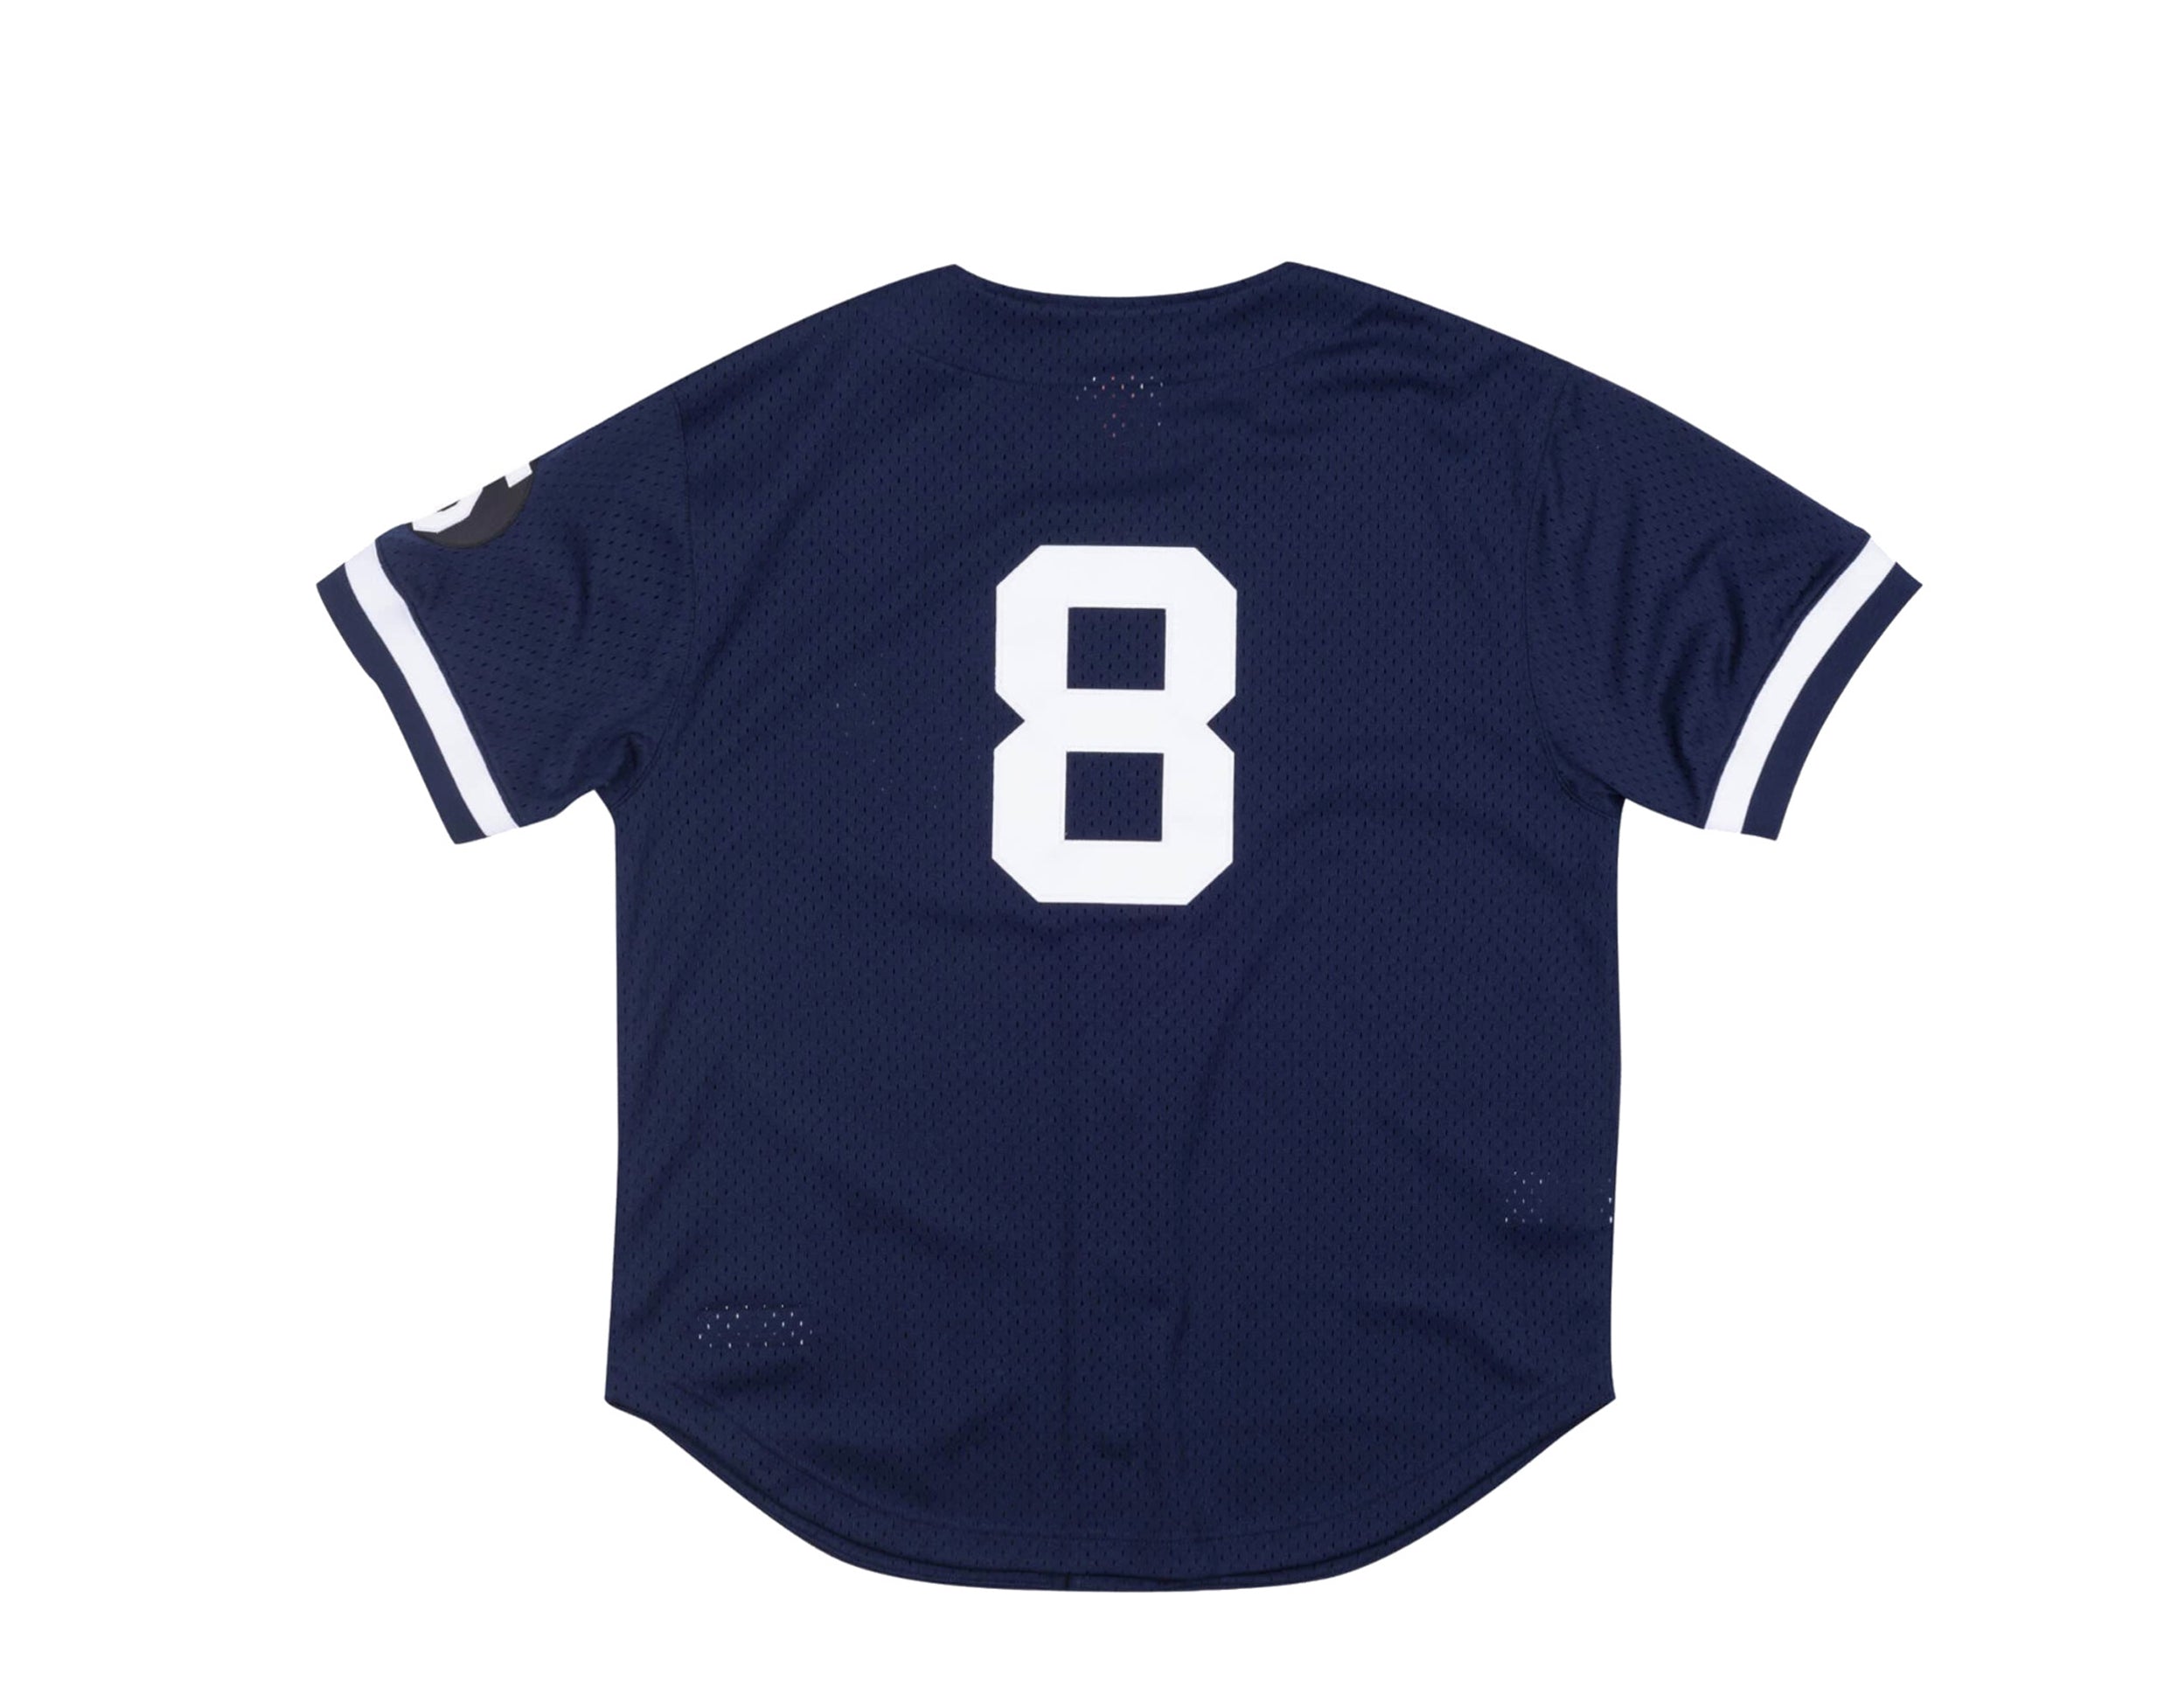 Yogi Berra New York Yankees Mitchell & Ness Cooperstown Collection Mesh Batting Practice Jersey – Navy